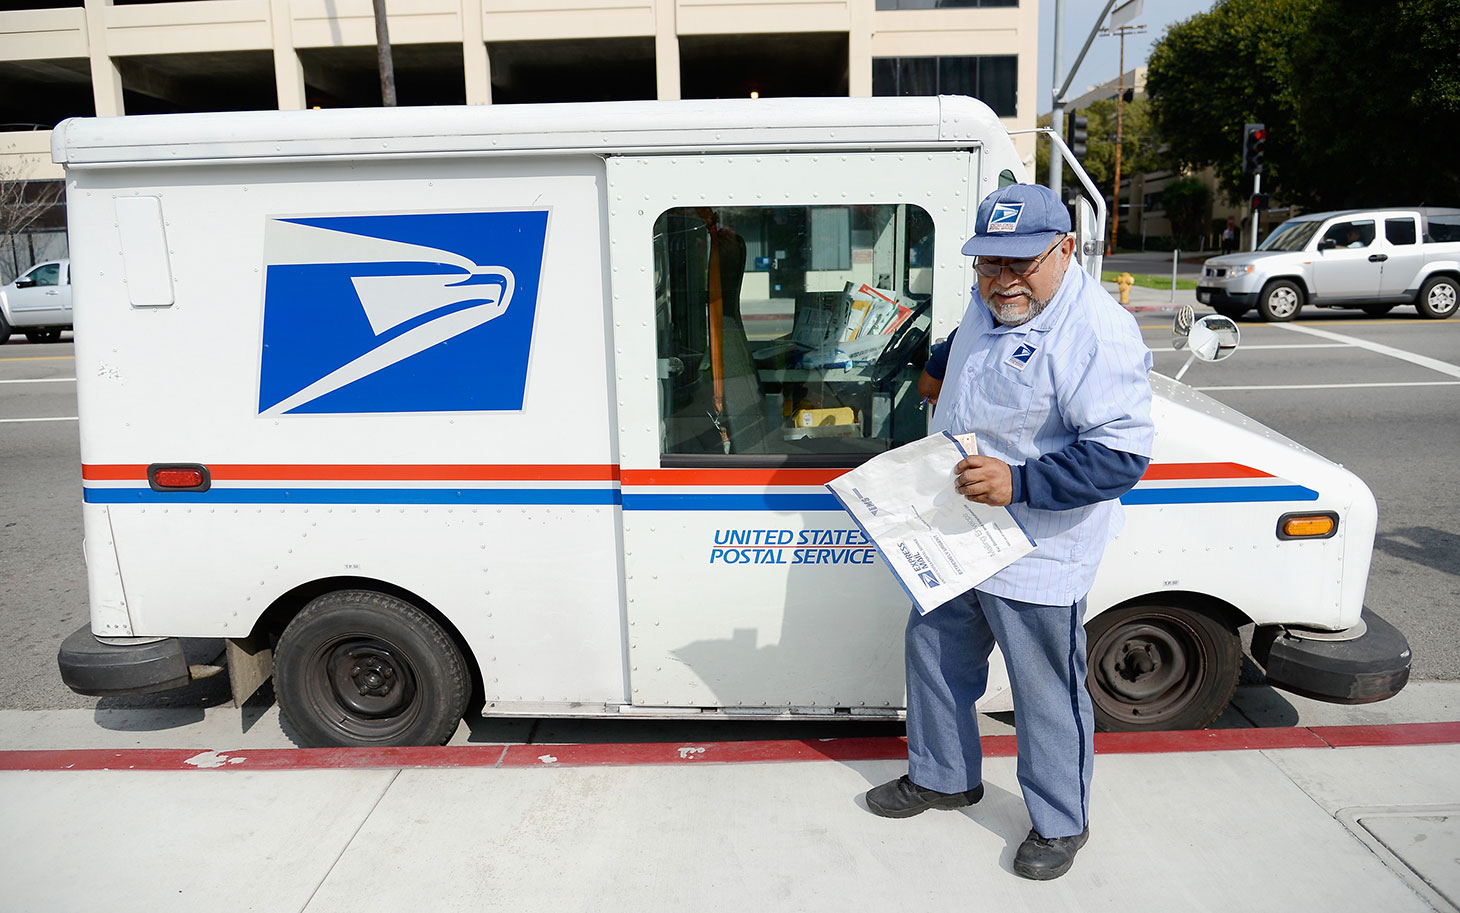 forward my mail us postal service